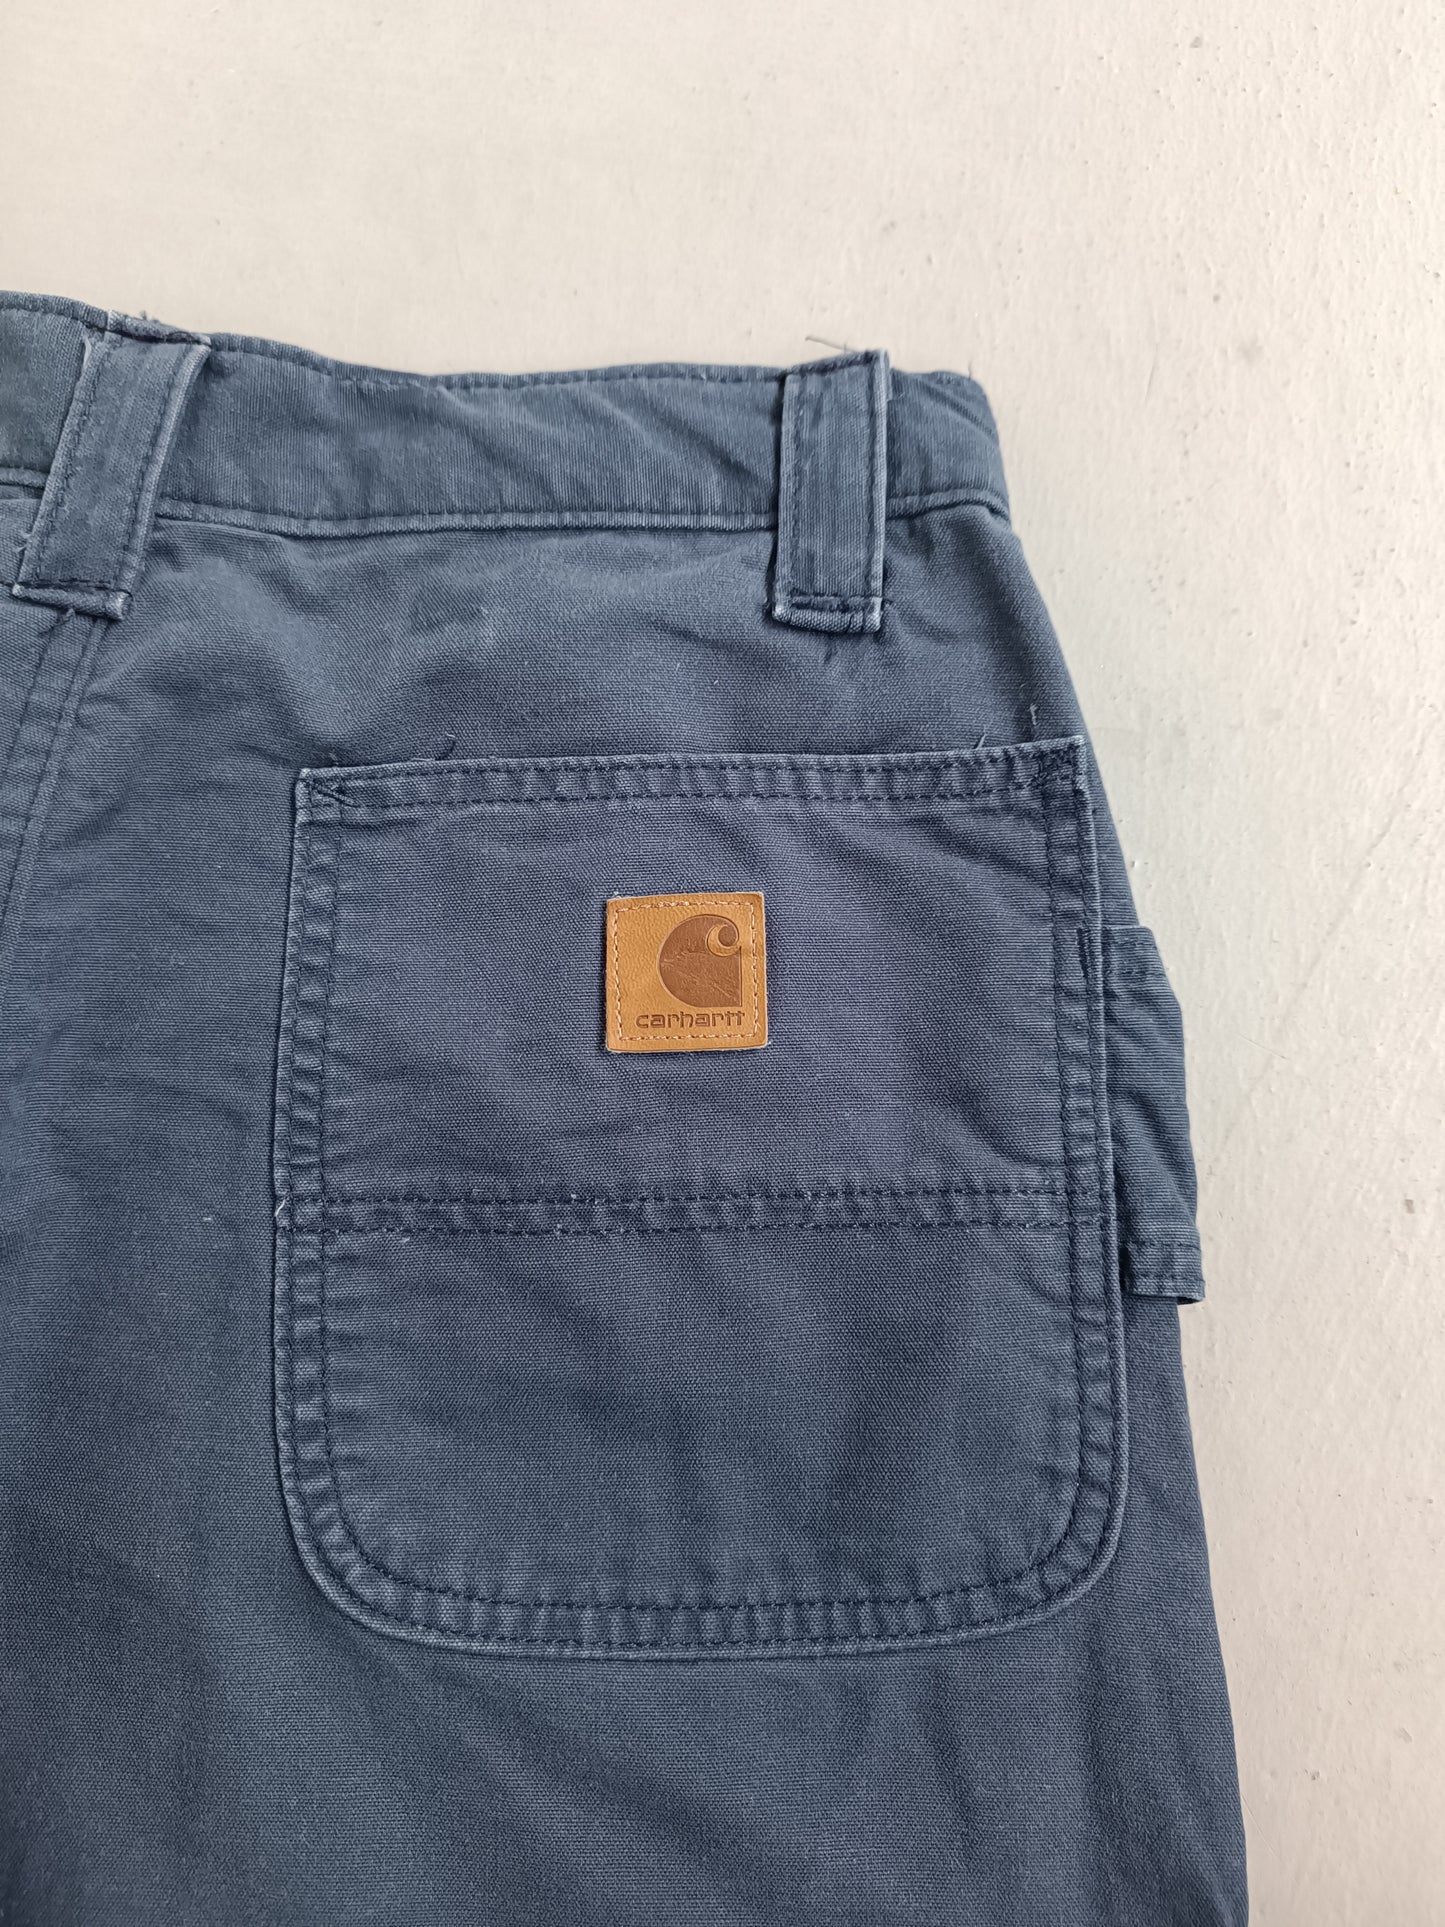 W30 Carhartt carpenter shorts